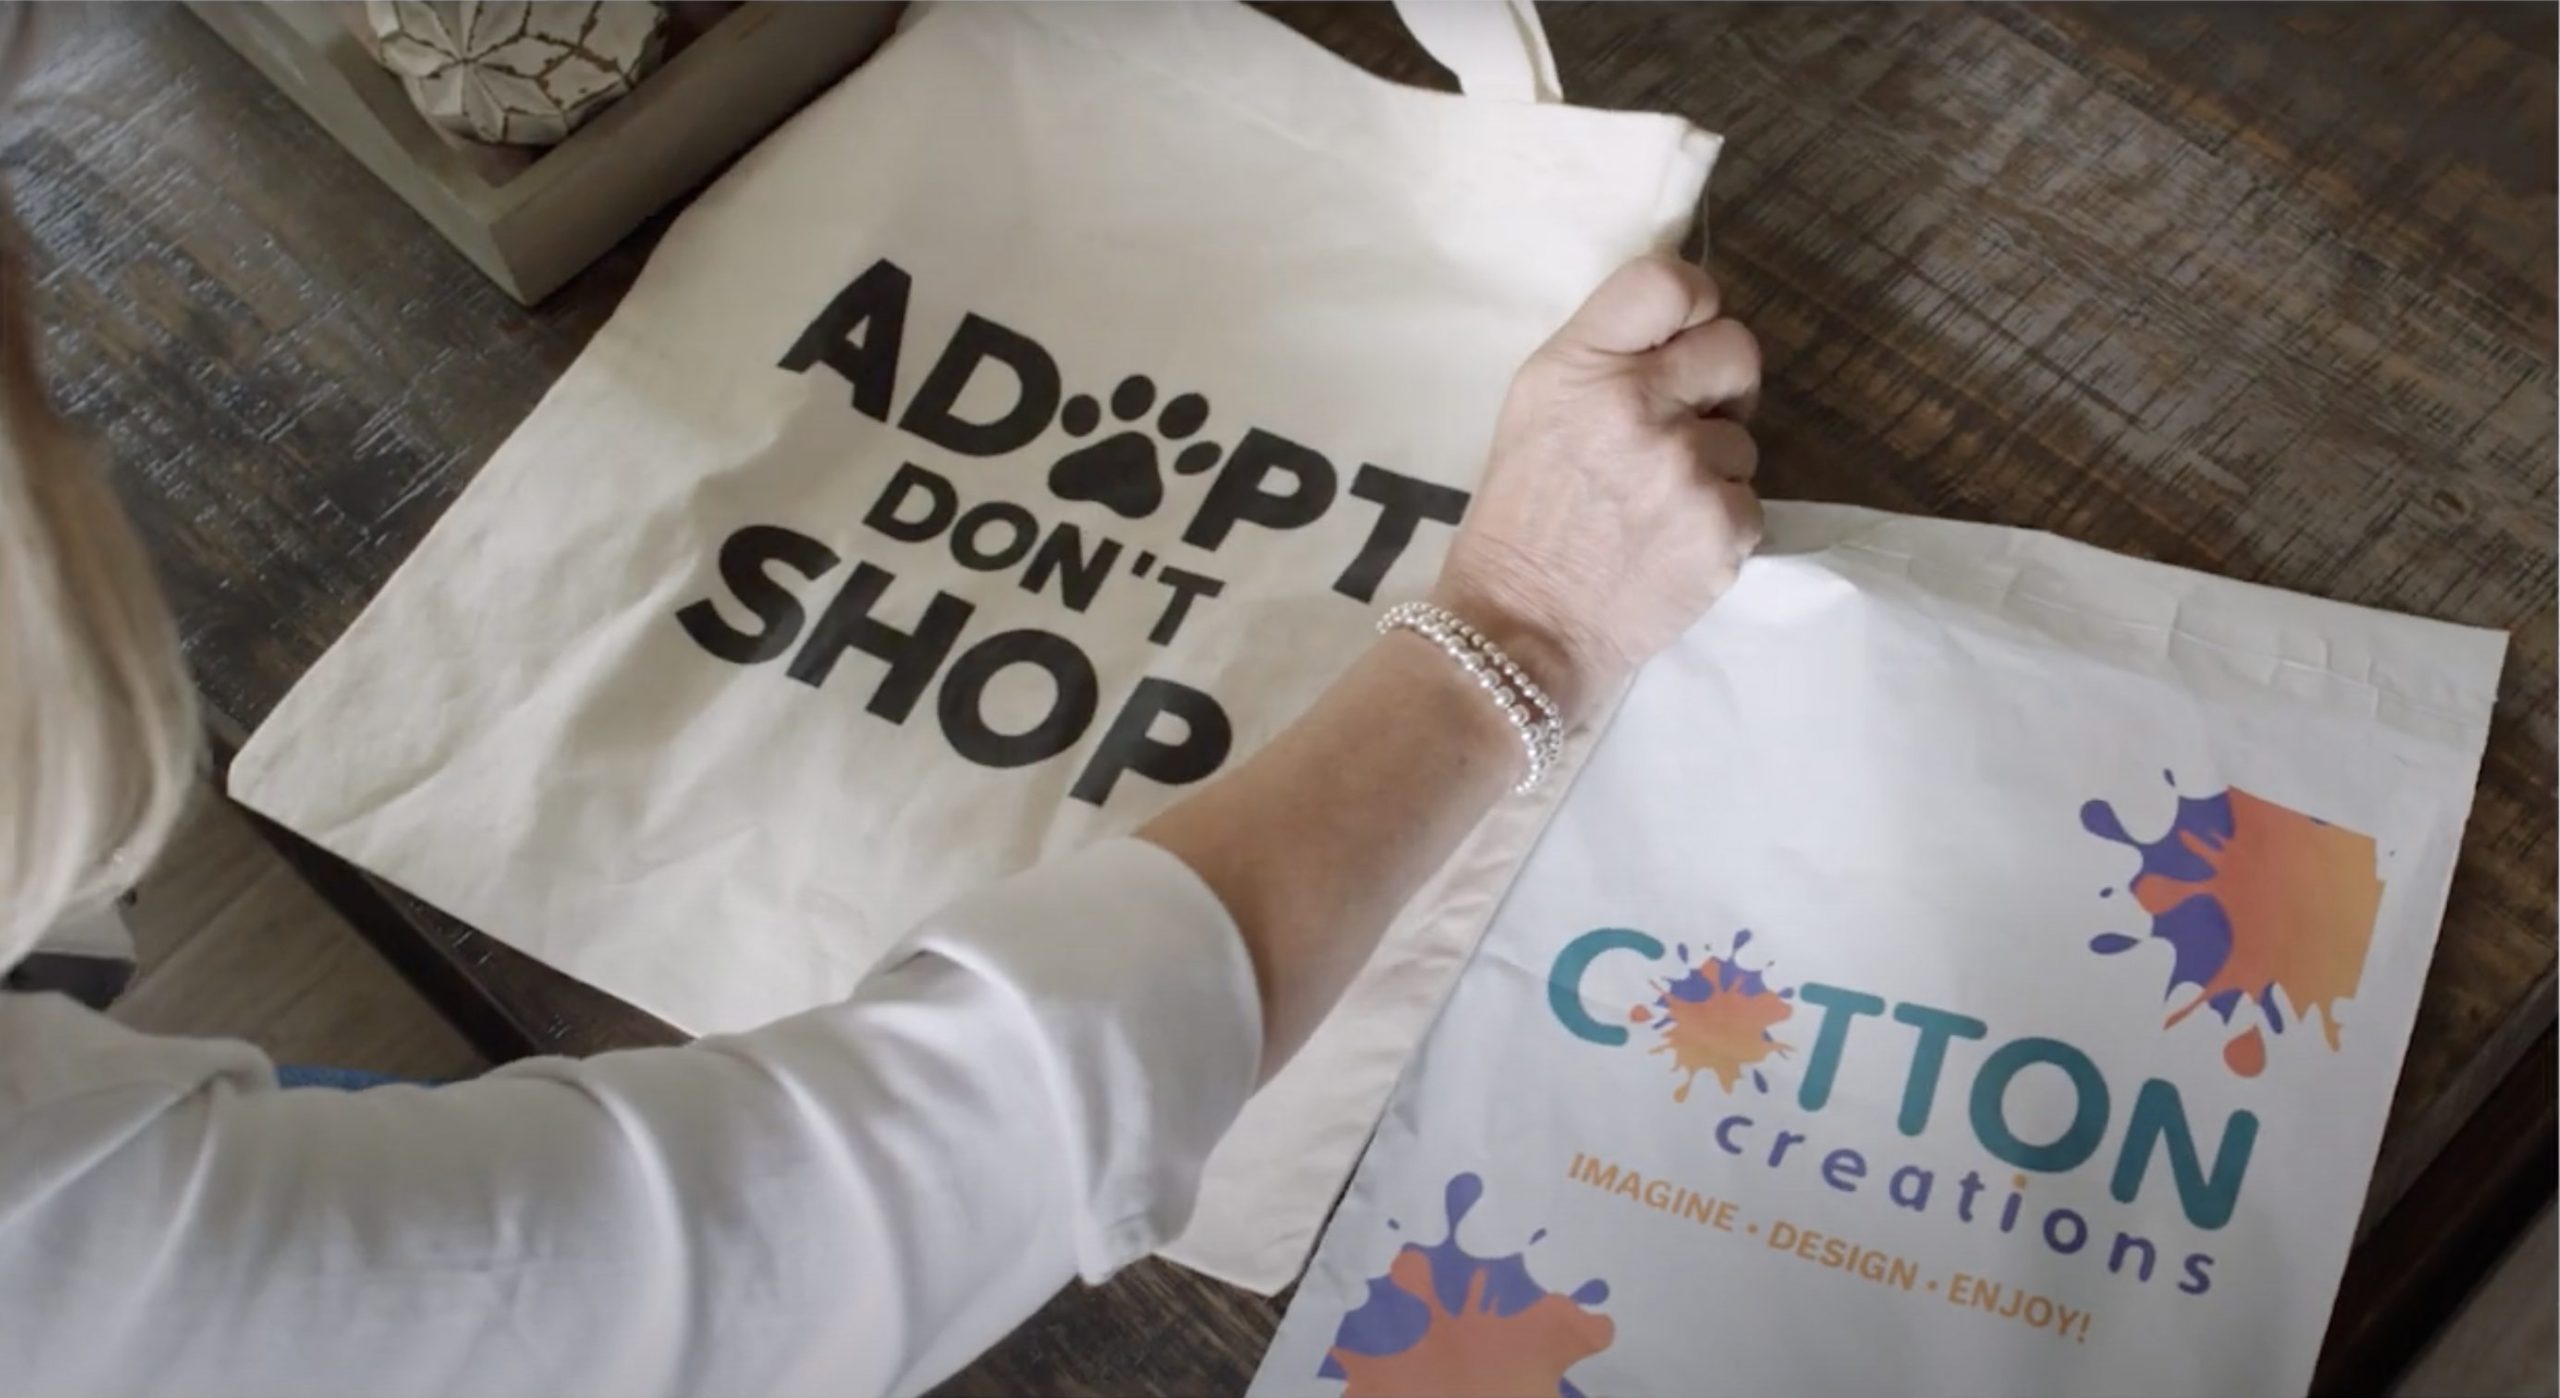 A custom printed tote bag that says "Adopt don't shop"